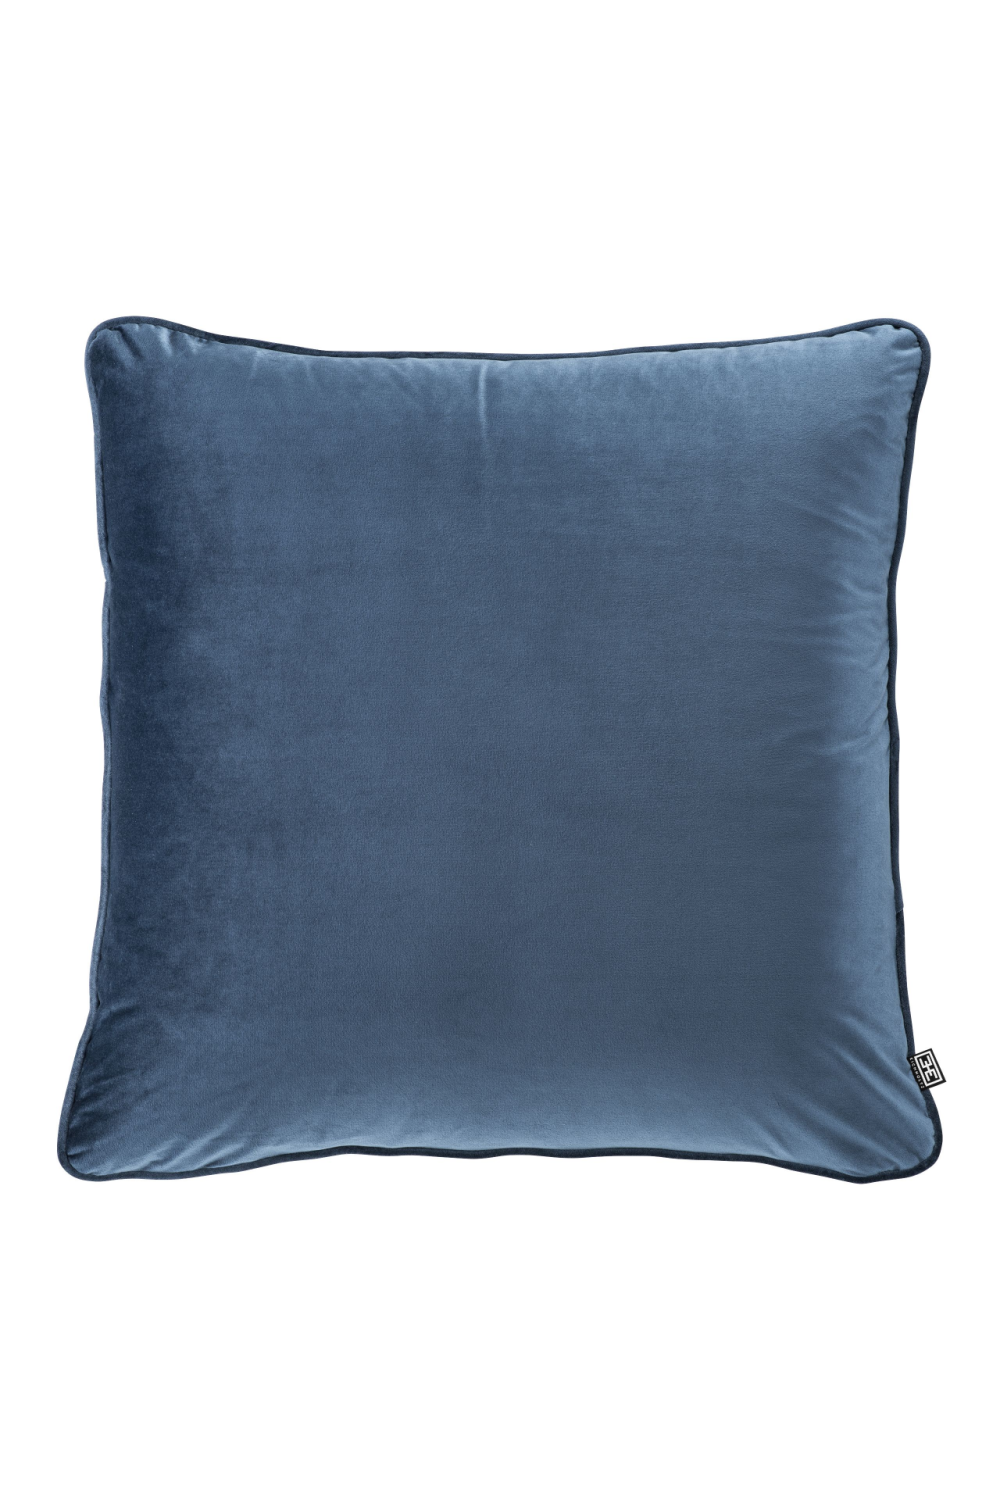 Square Blue Velvet Pillow | Eichholtz Roche | OROA